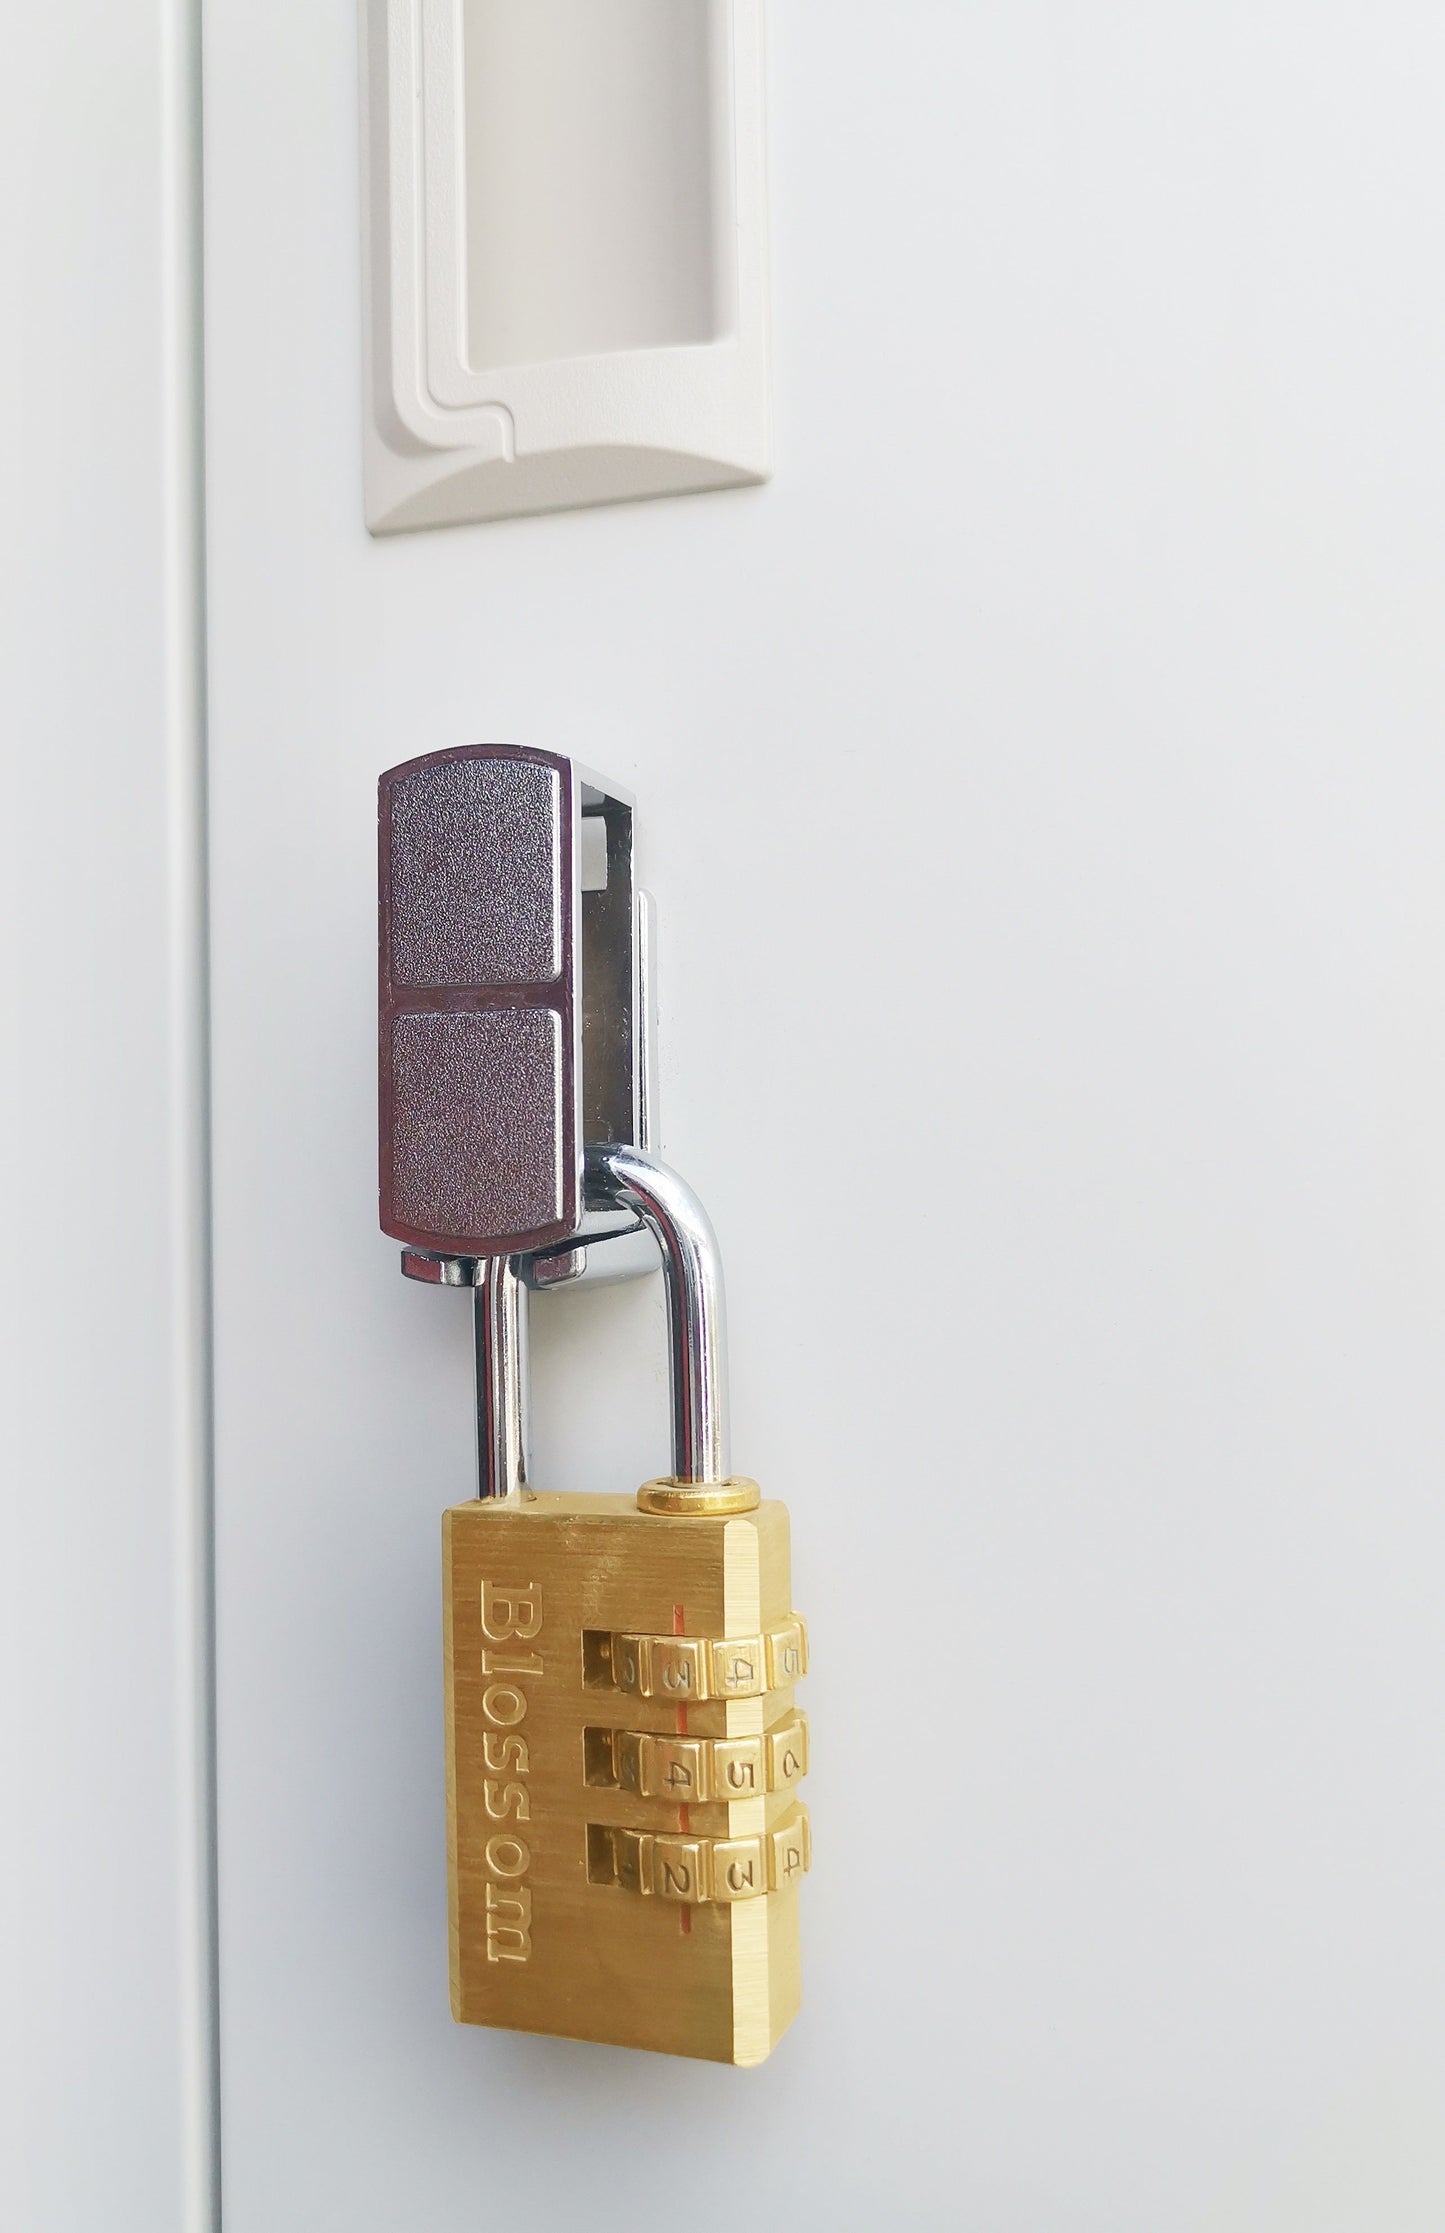 Padlock-operated lock 4 Door Locker for Office Gym Grey - image5